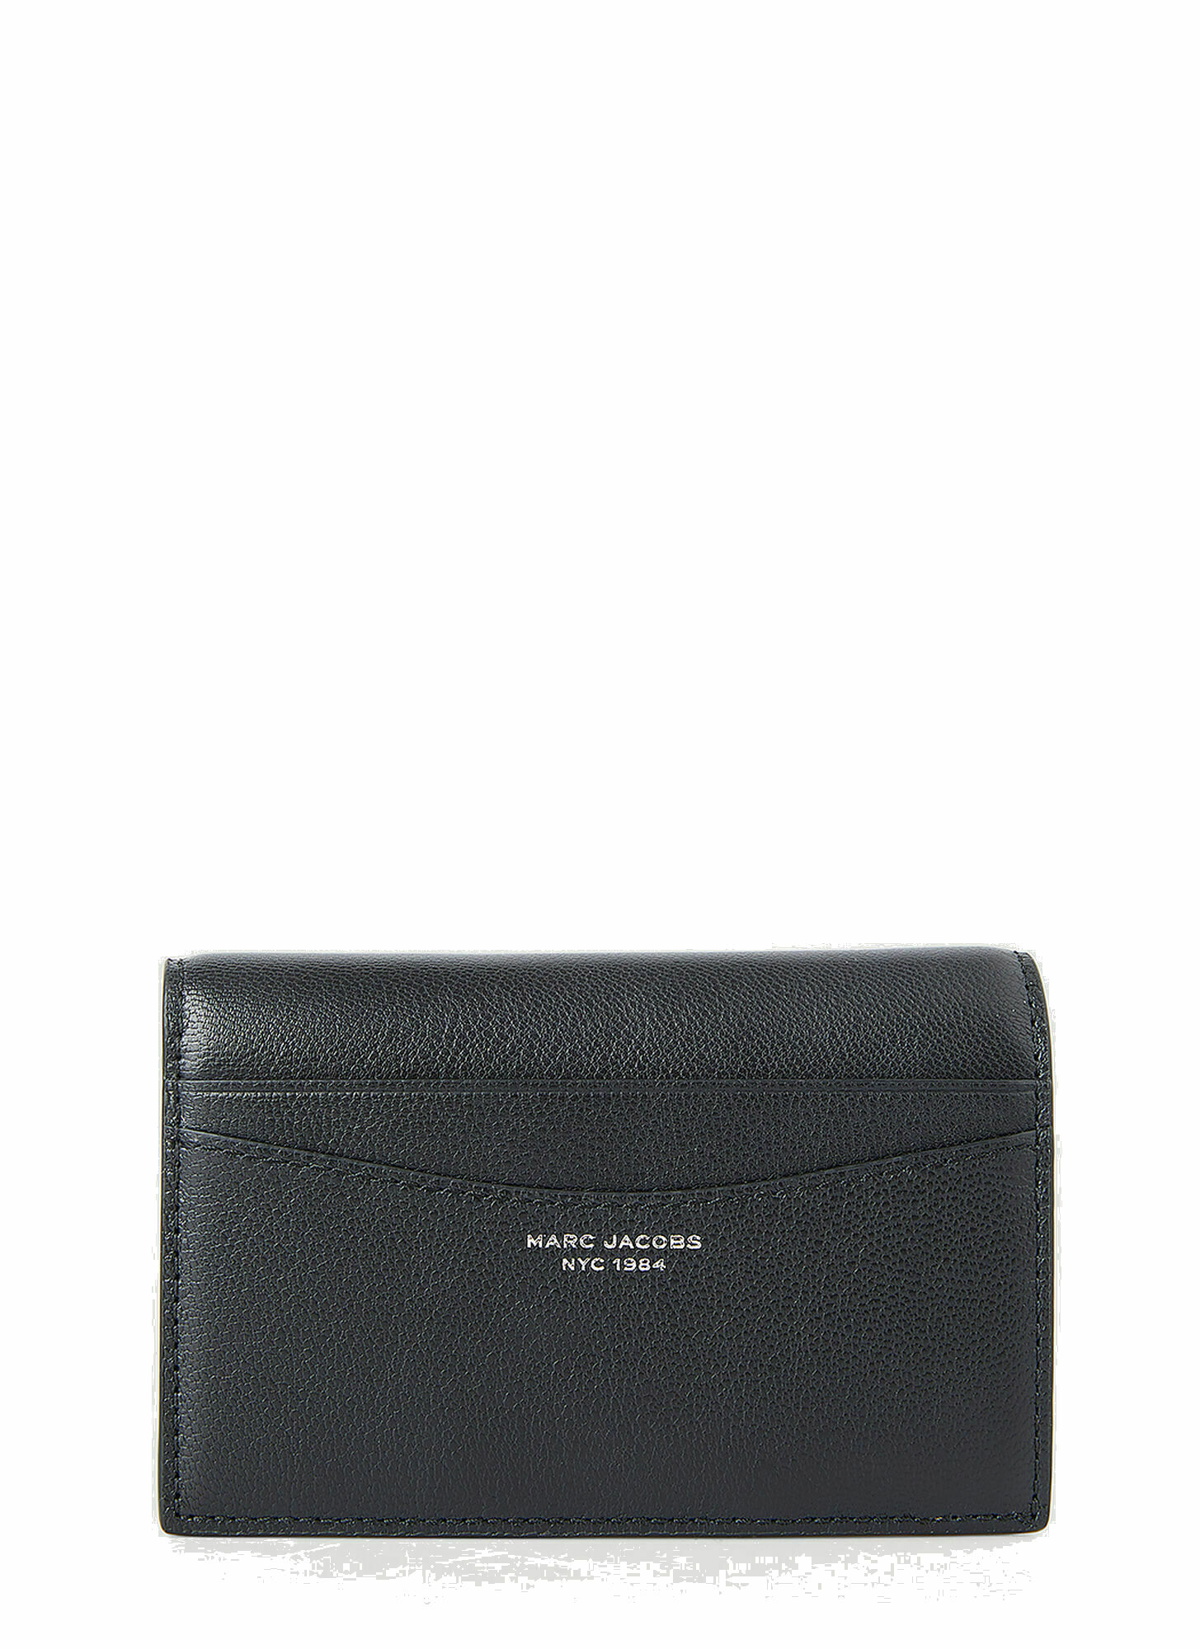 Slim 84 Bifold Wallet in Black Marc Jacobs